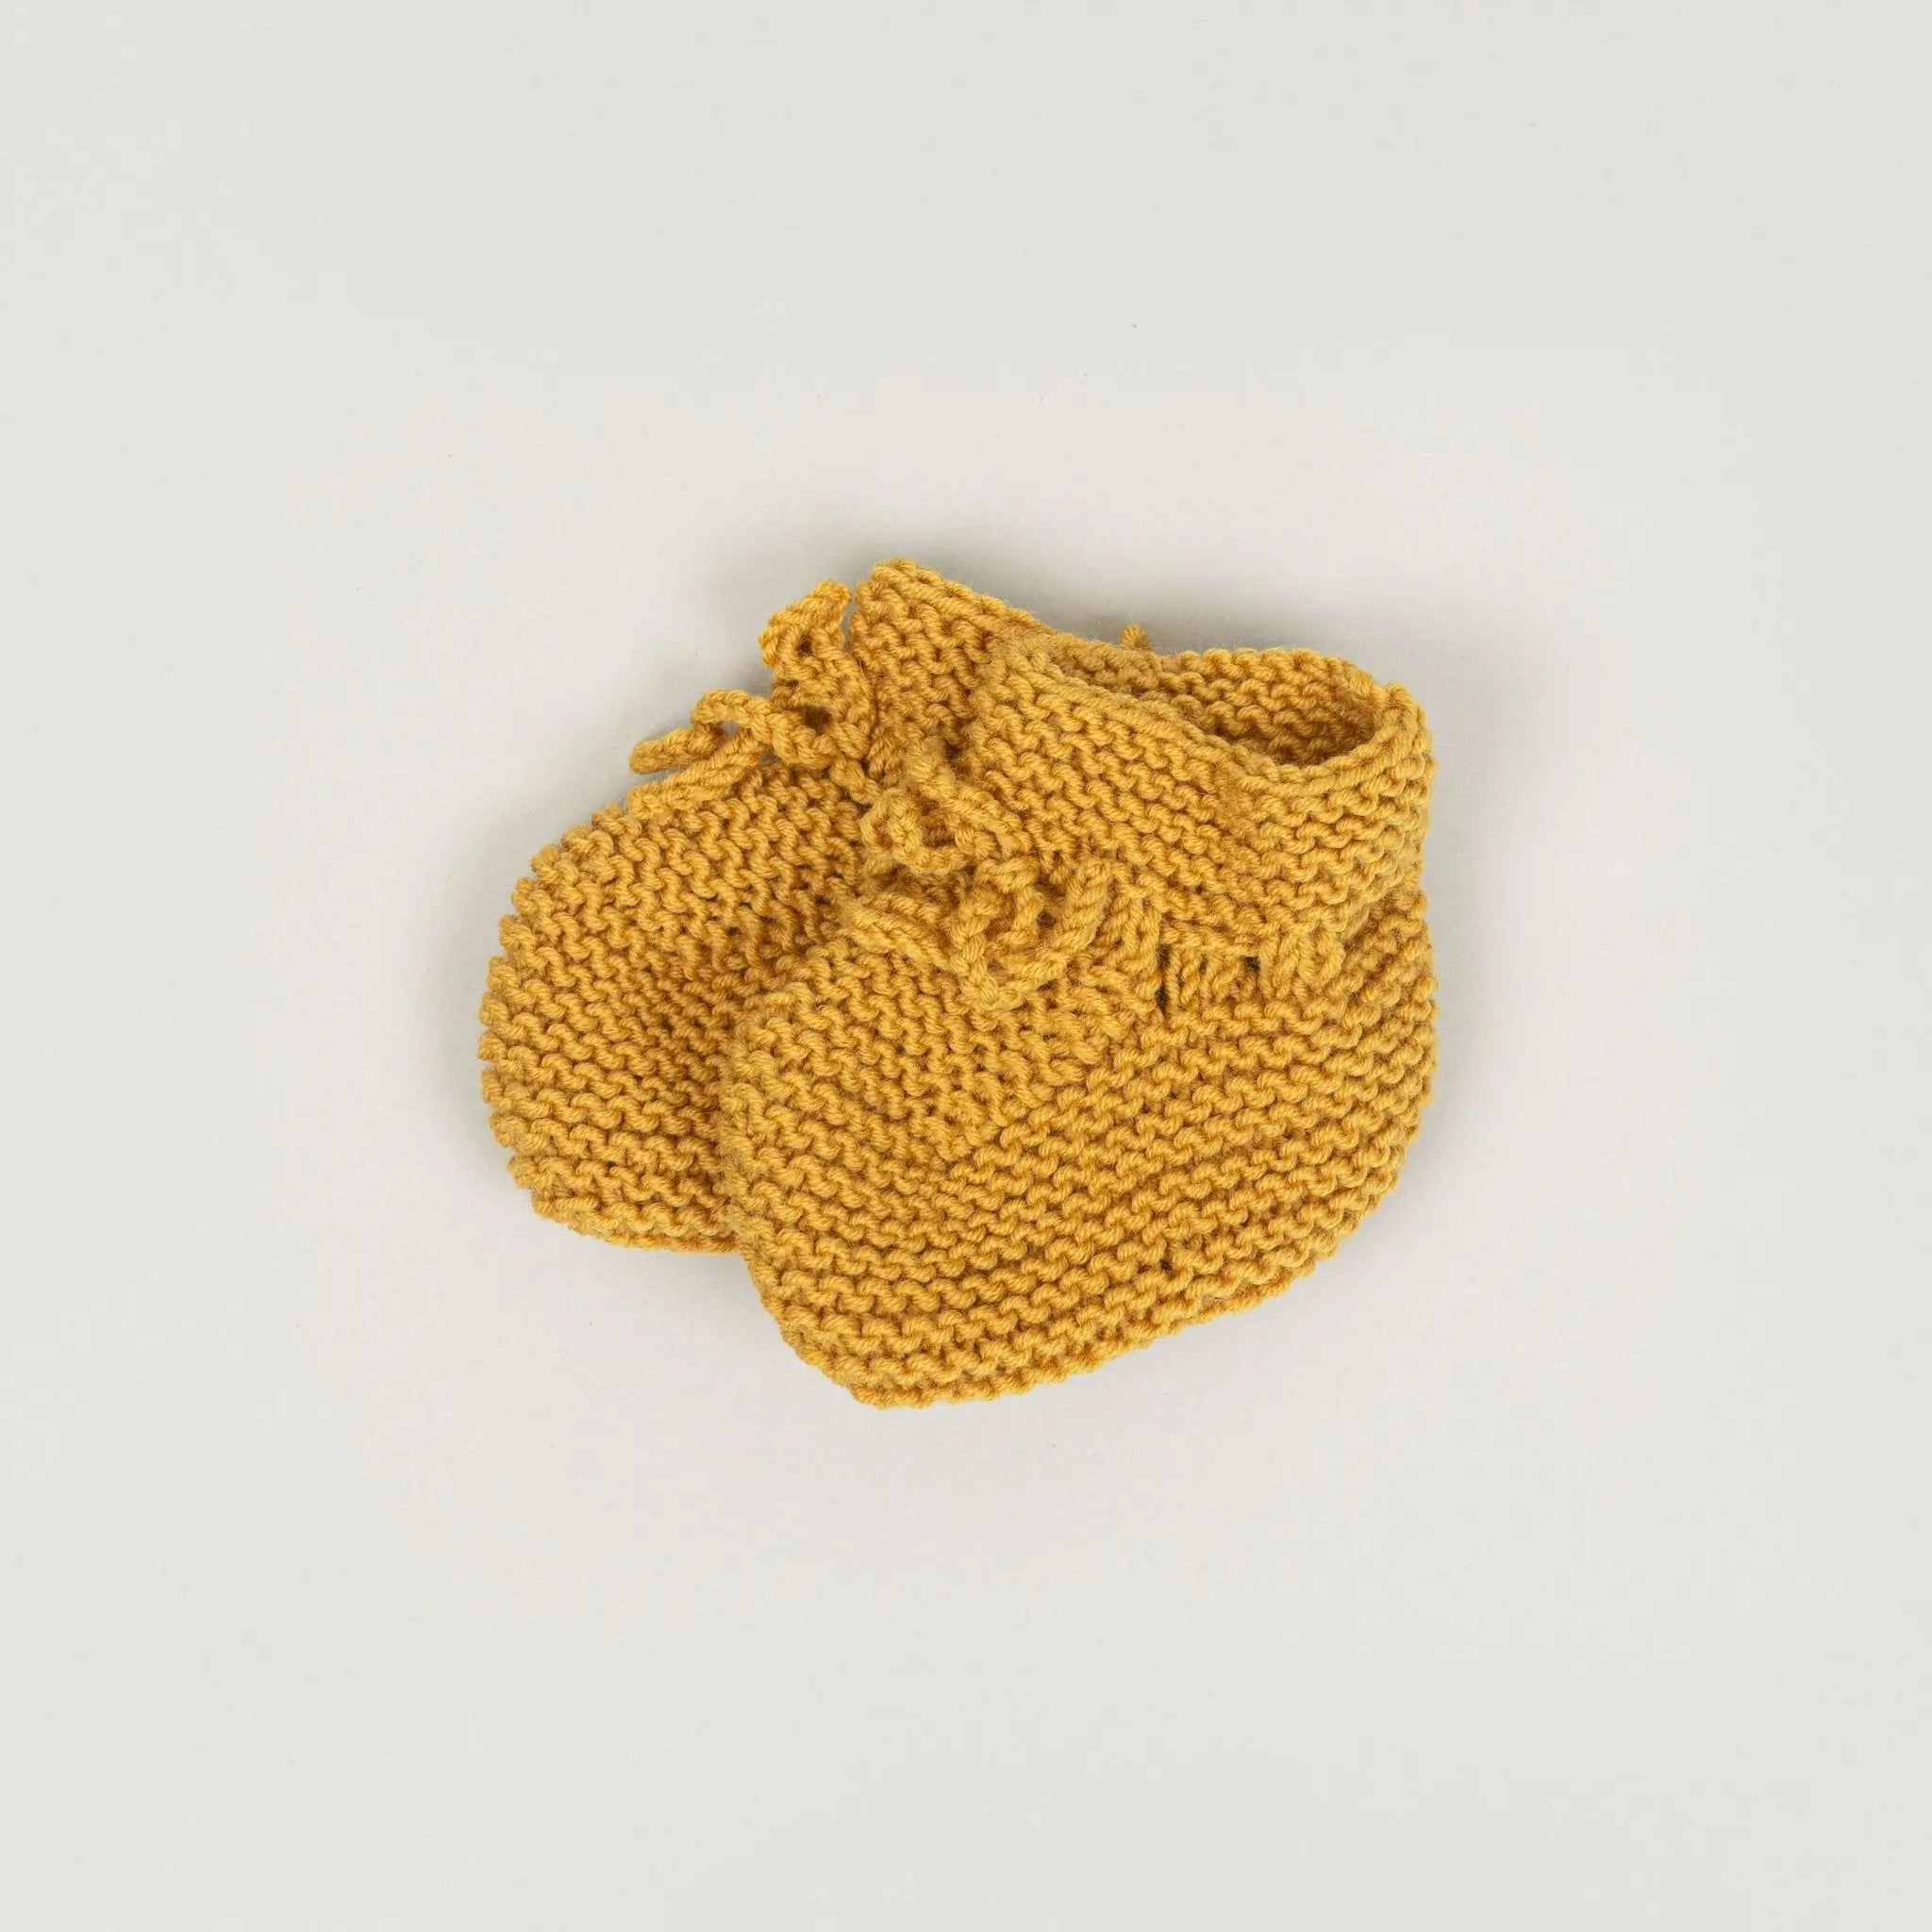 Babybox and Family BabyBox Collection Handmade Strickschuhe aus Wolle - Auslauffarben 56/62 senf #farbe_56/62